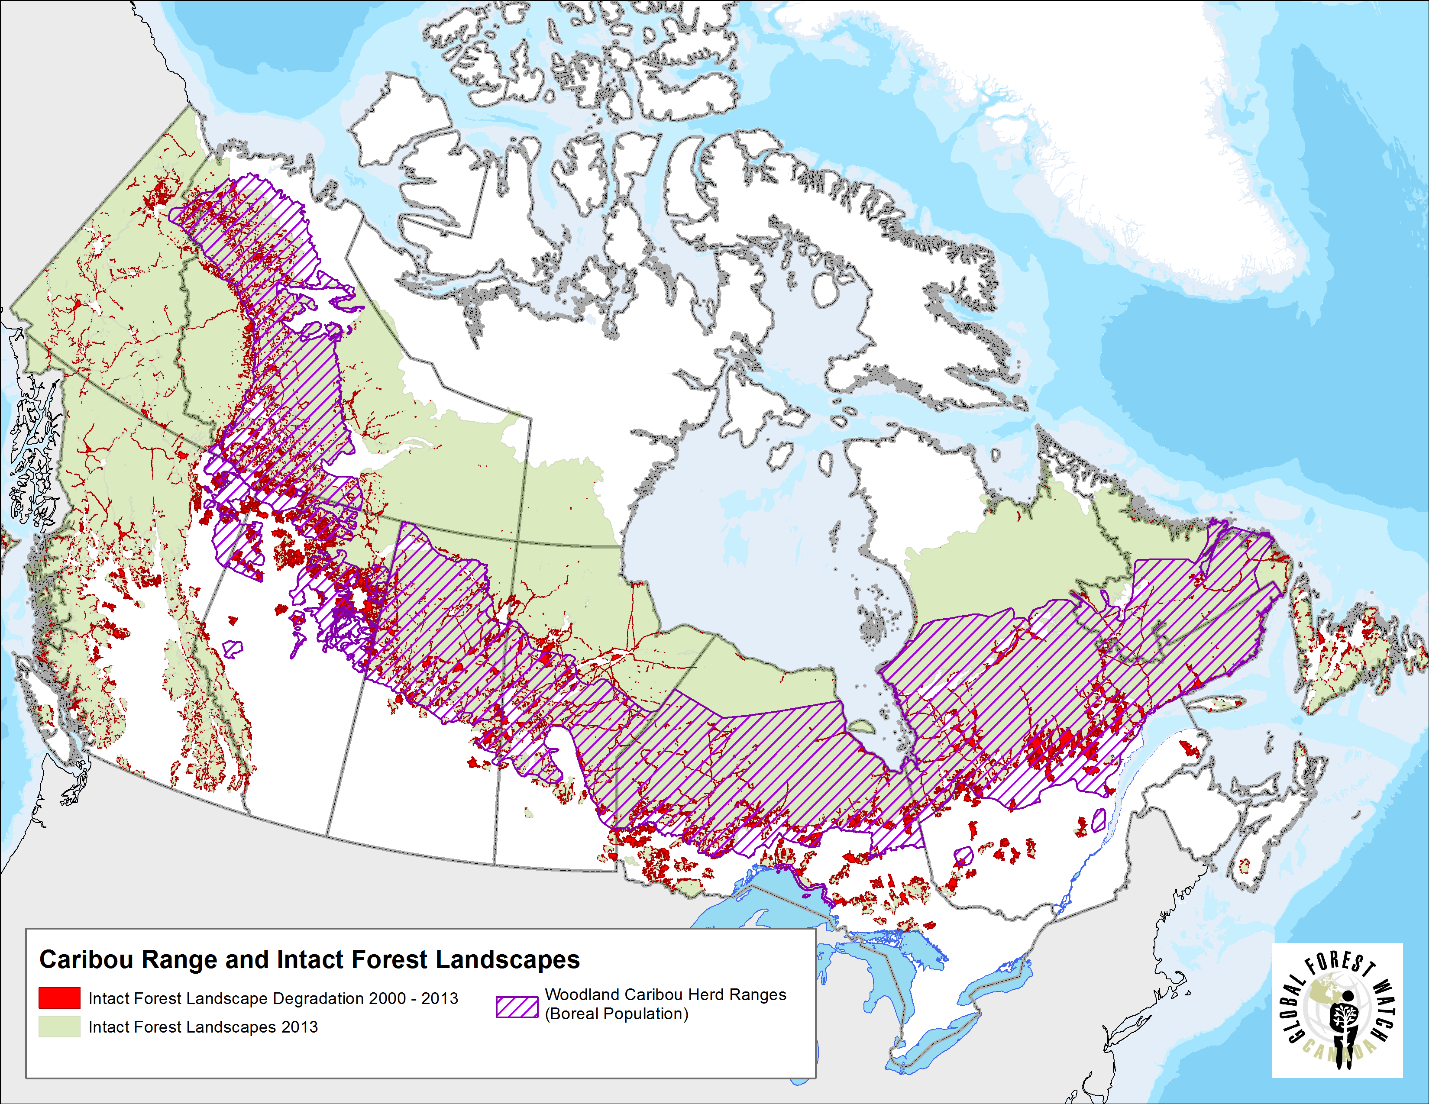 IFL degradation and boreal woodland caribou ranges.